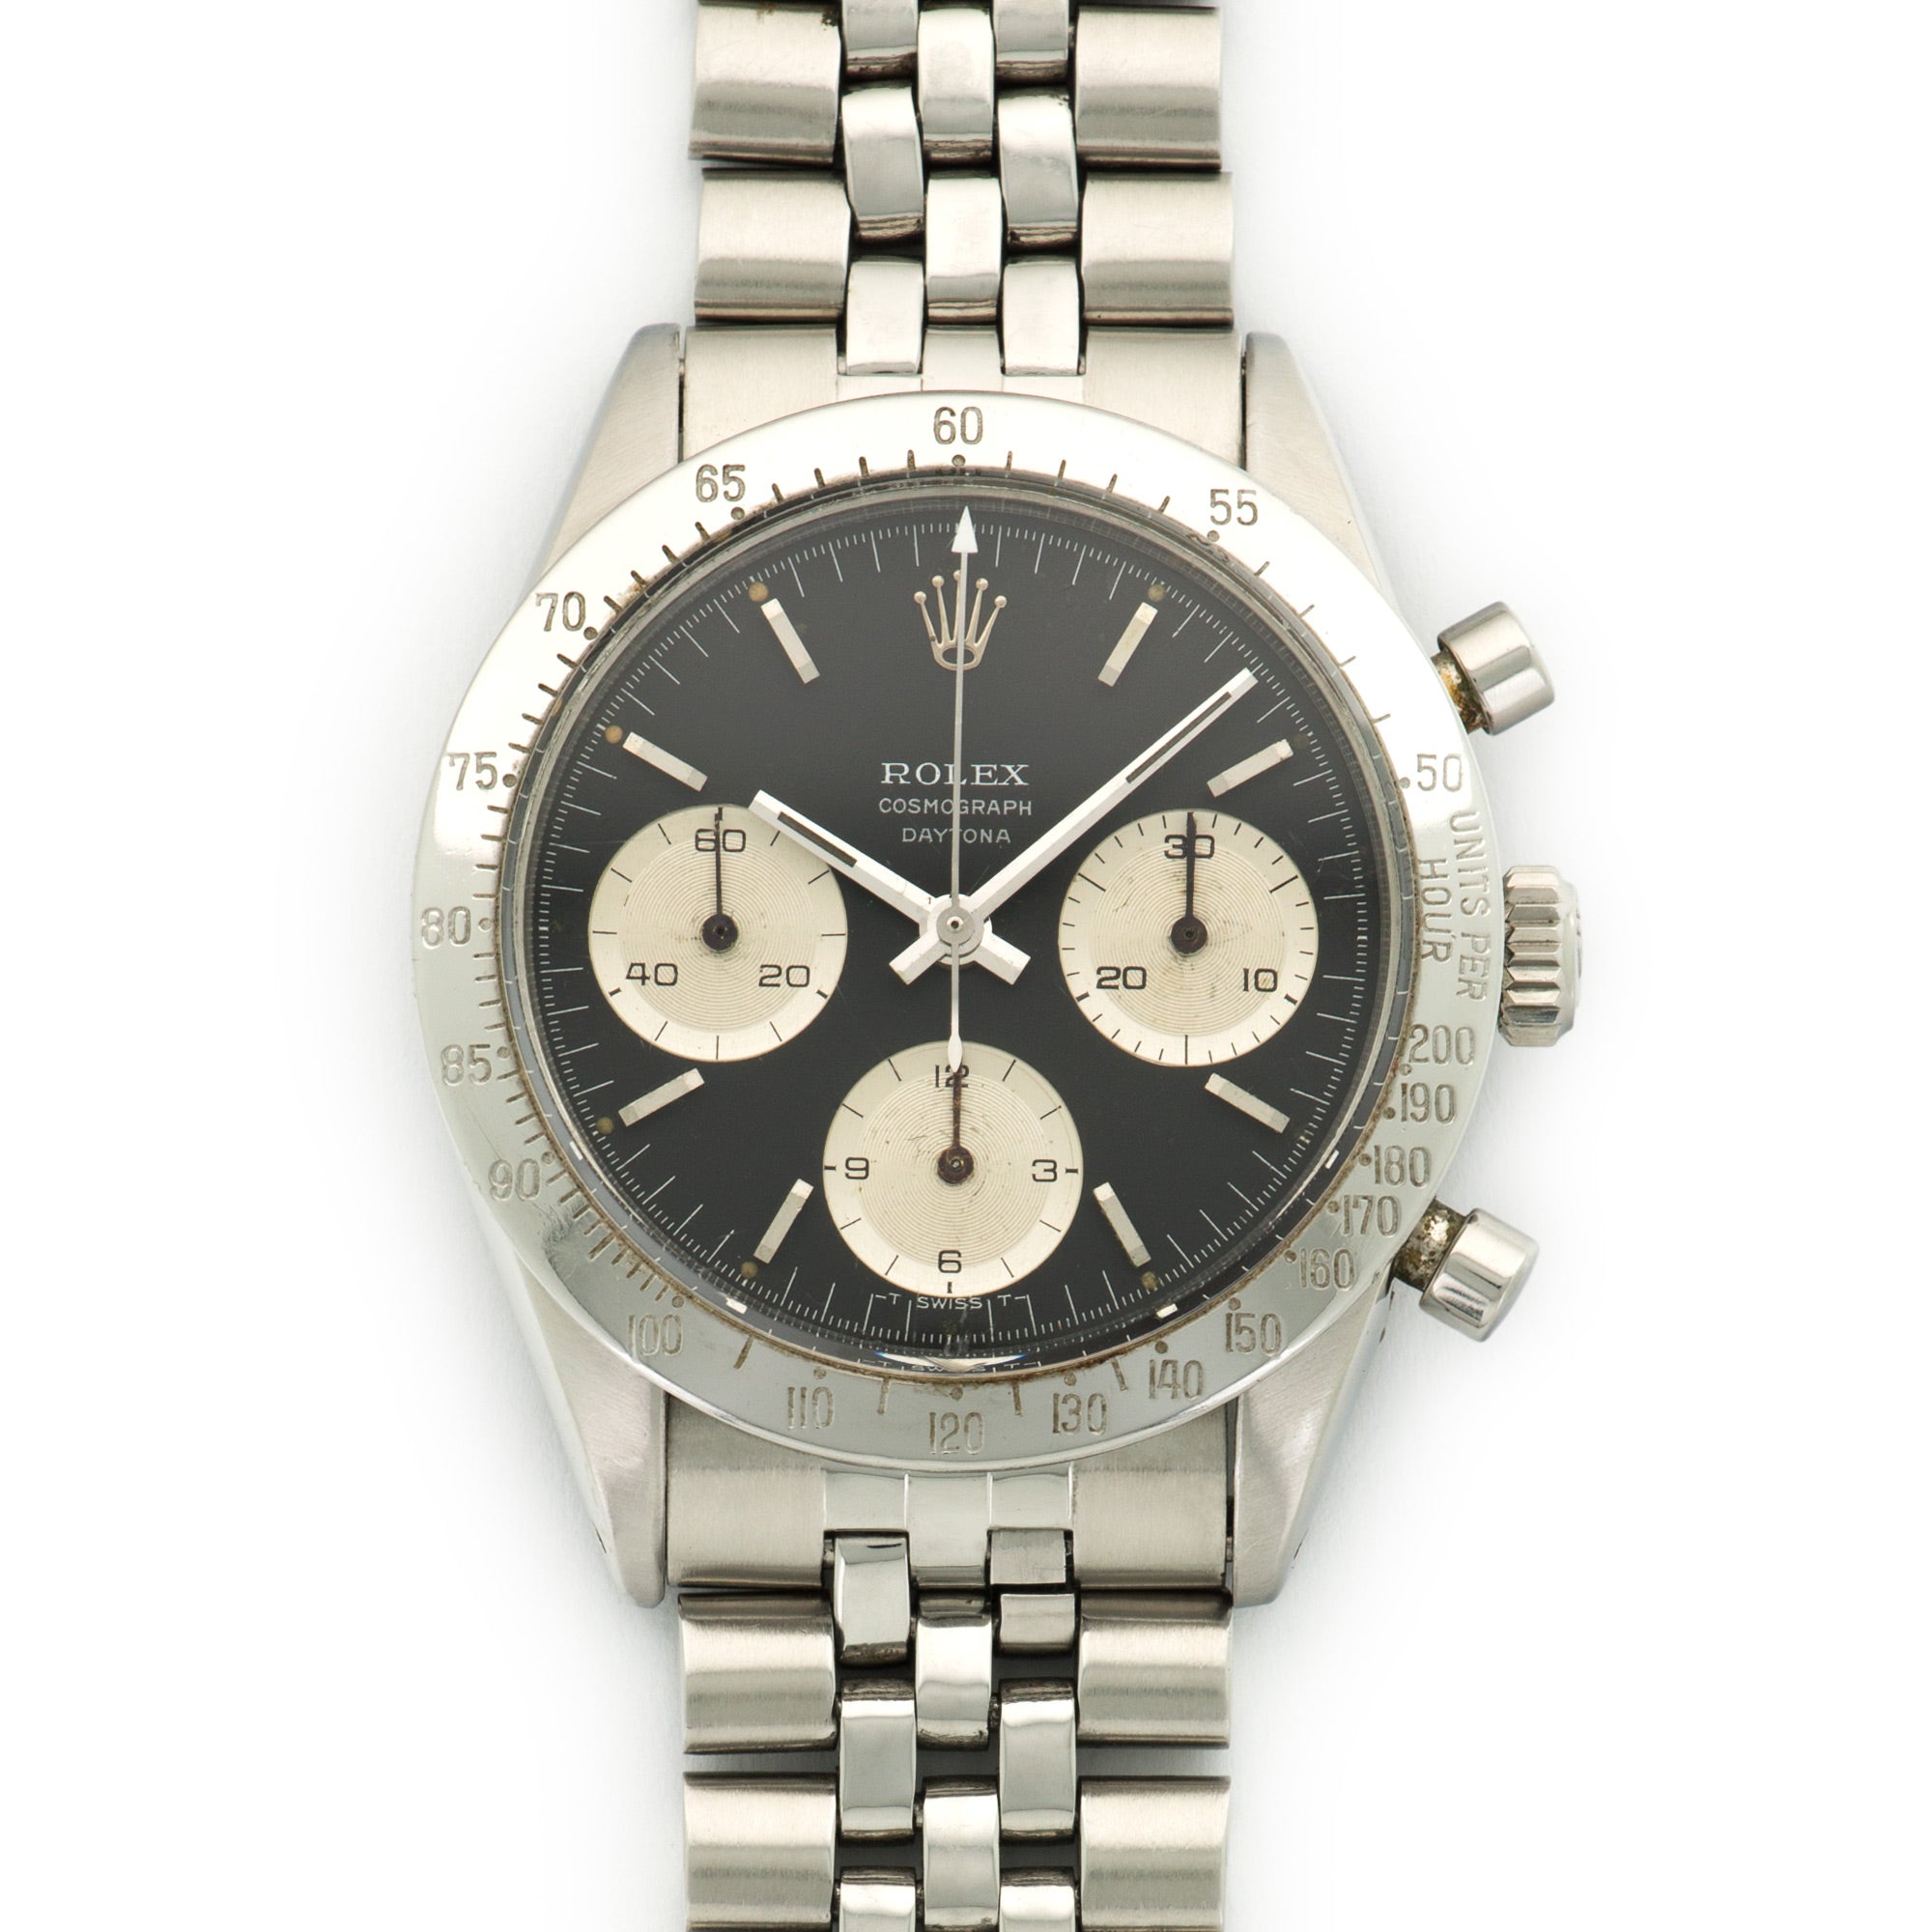 Rolex - Rolex Stainless Steel Cosmograph Daytona Watch Ref. 6239 - The Keystone Watches